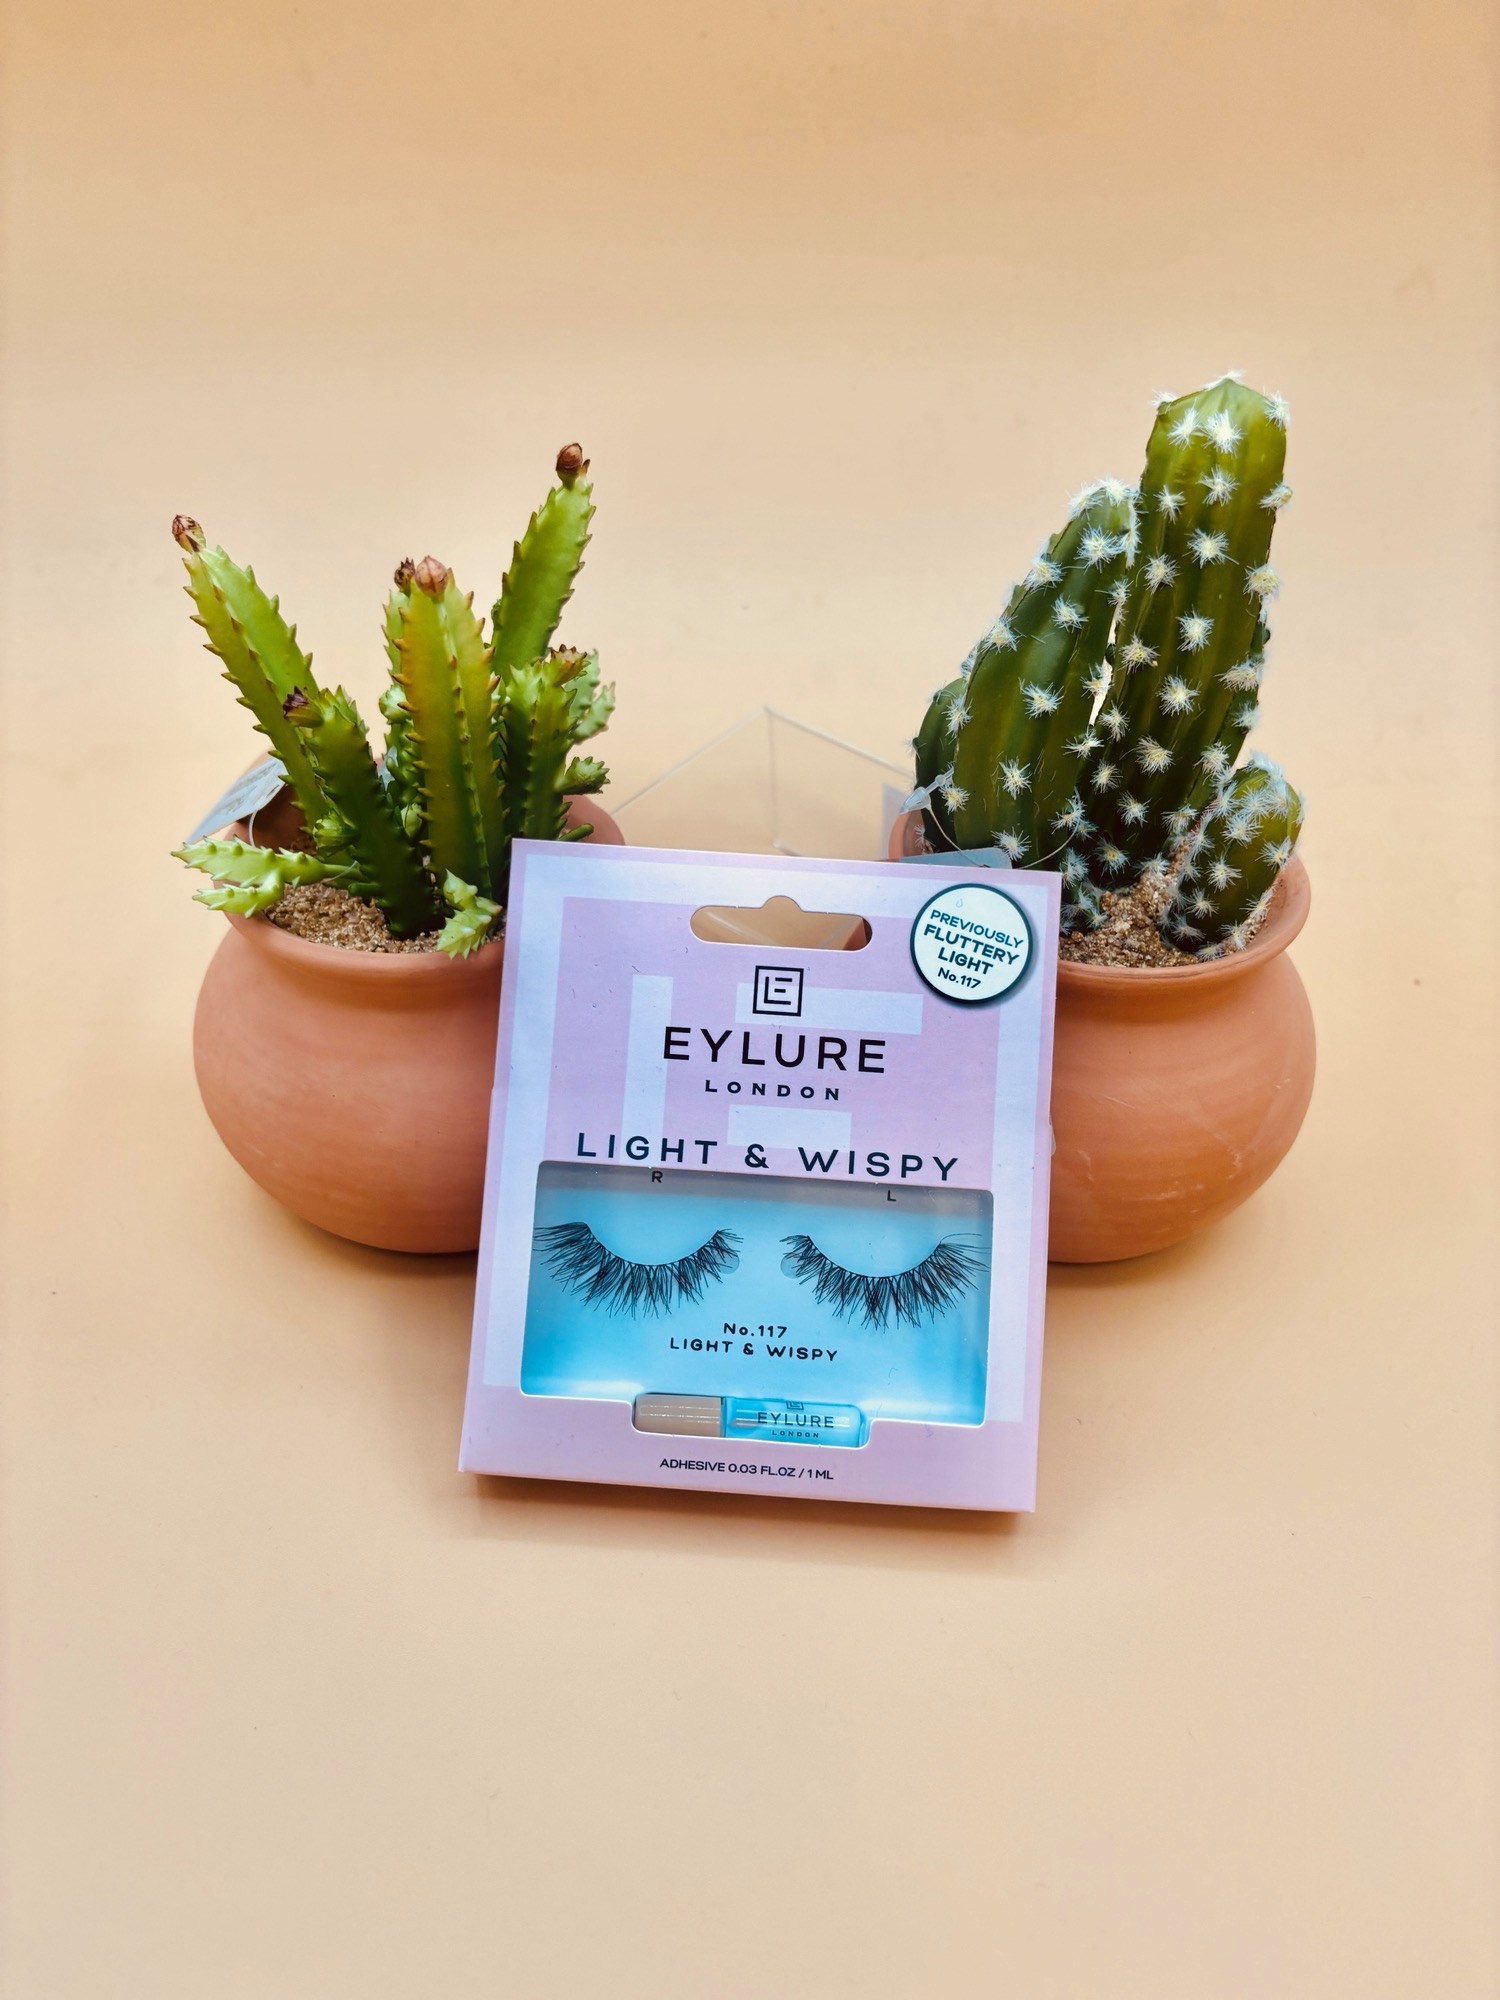 Eylure eye lashes and plants